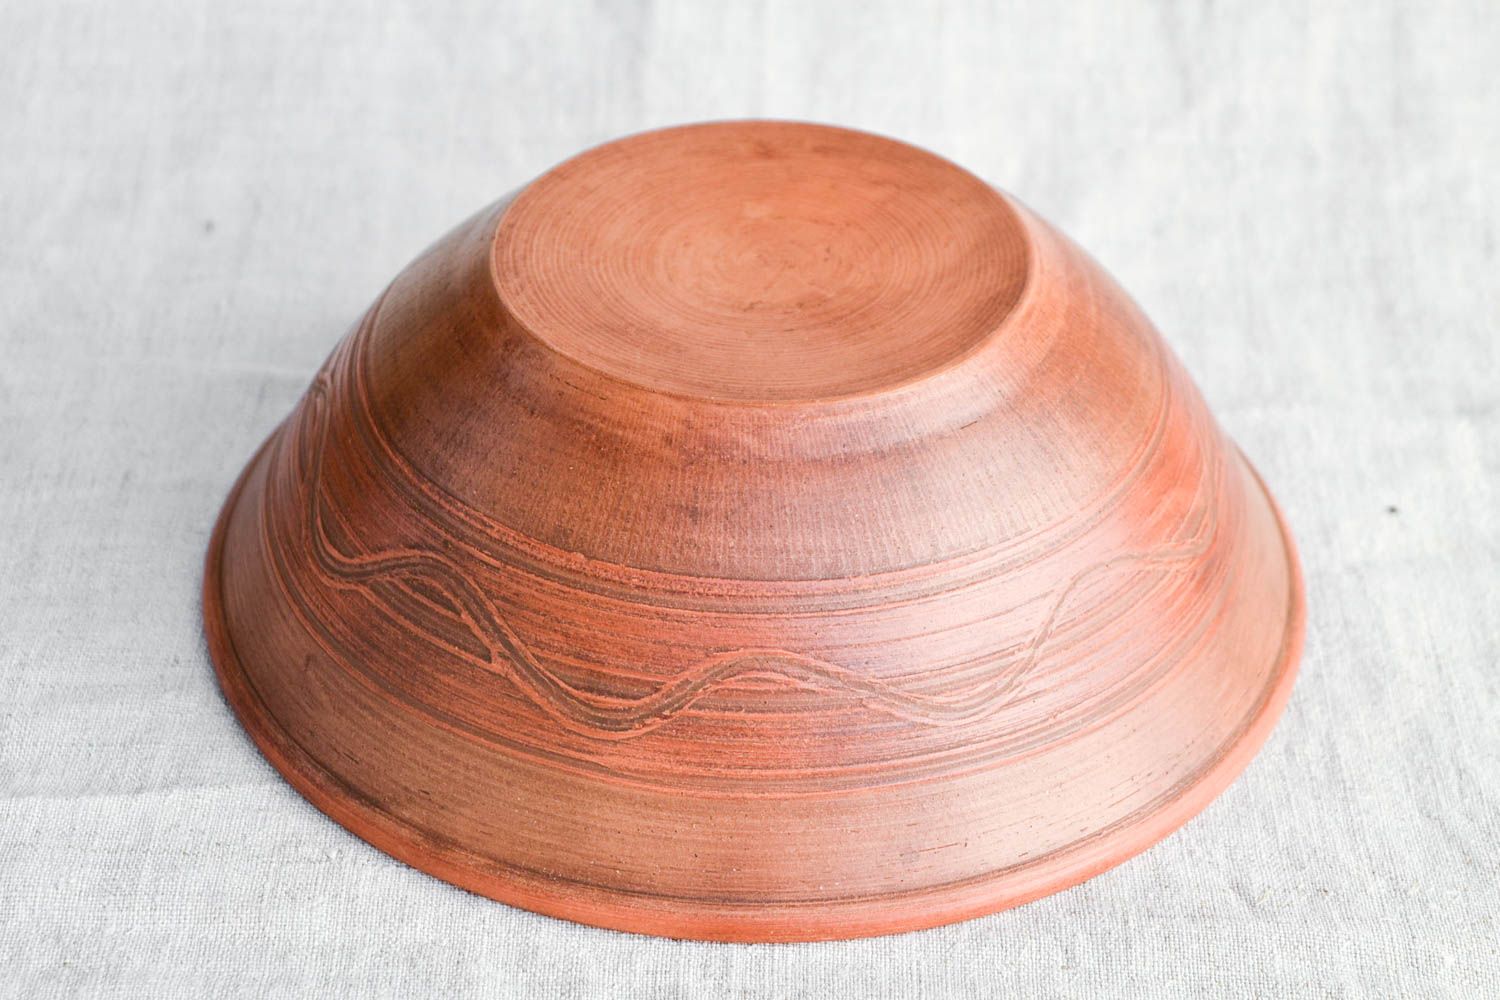 Handmade ceramic plate pottery bowl serving plate salad bowl kitchen decor photo 5